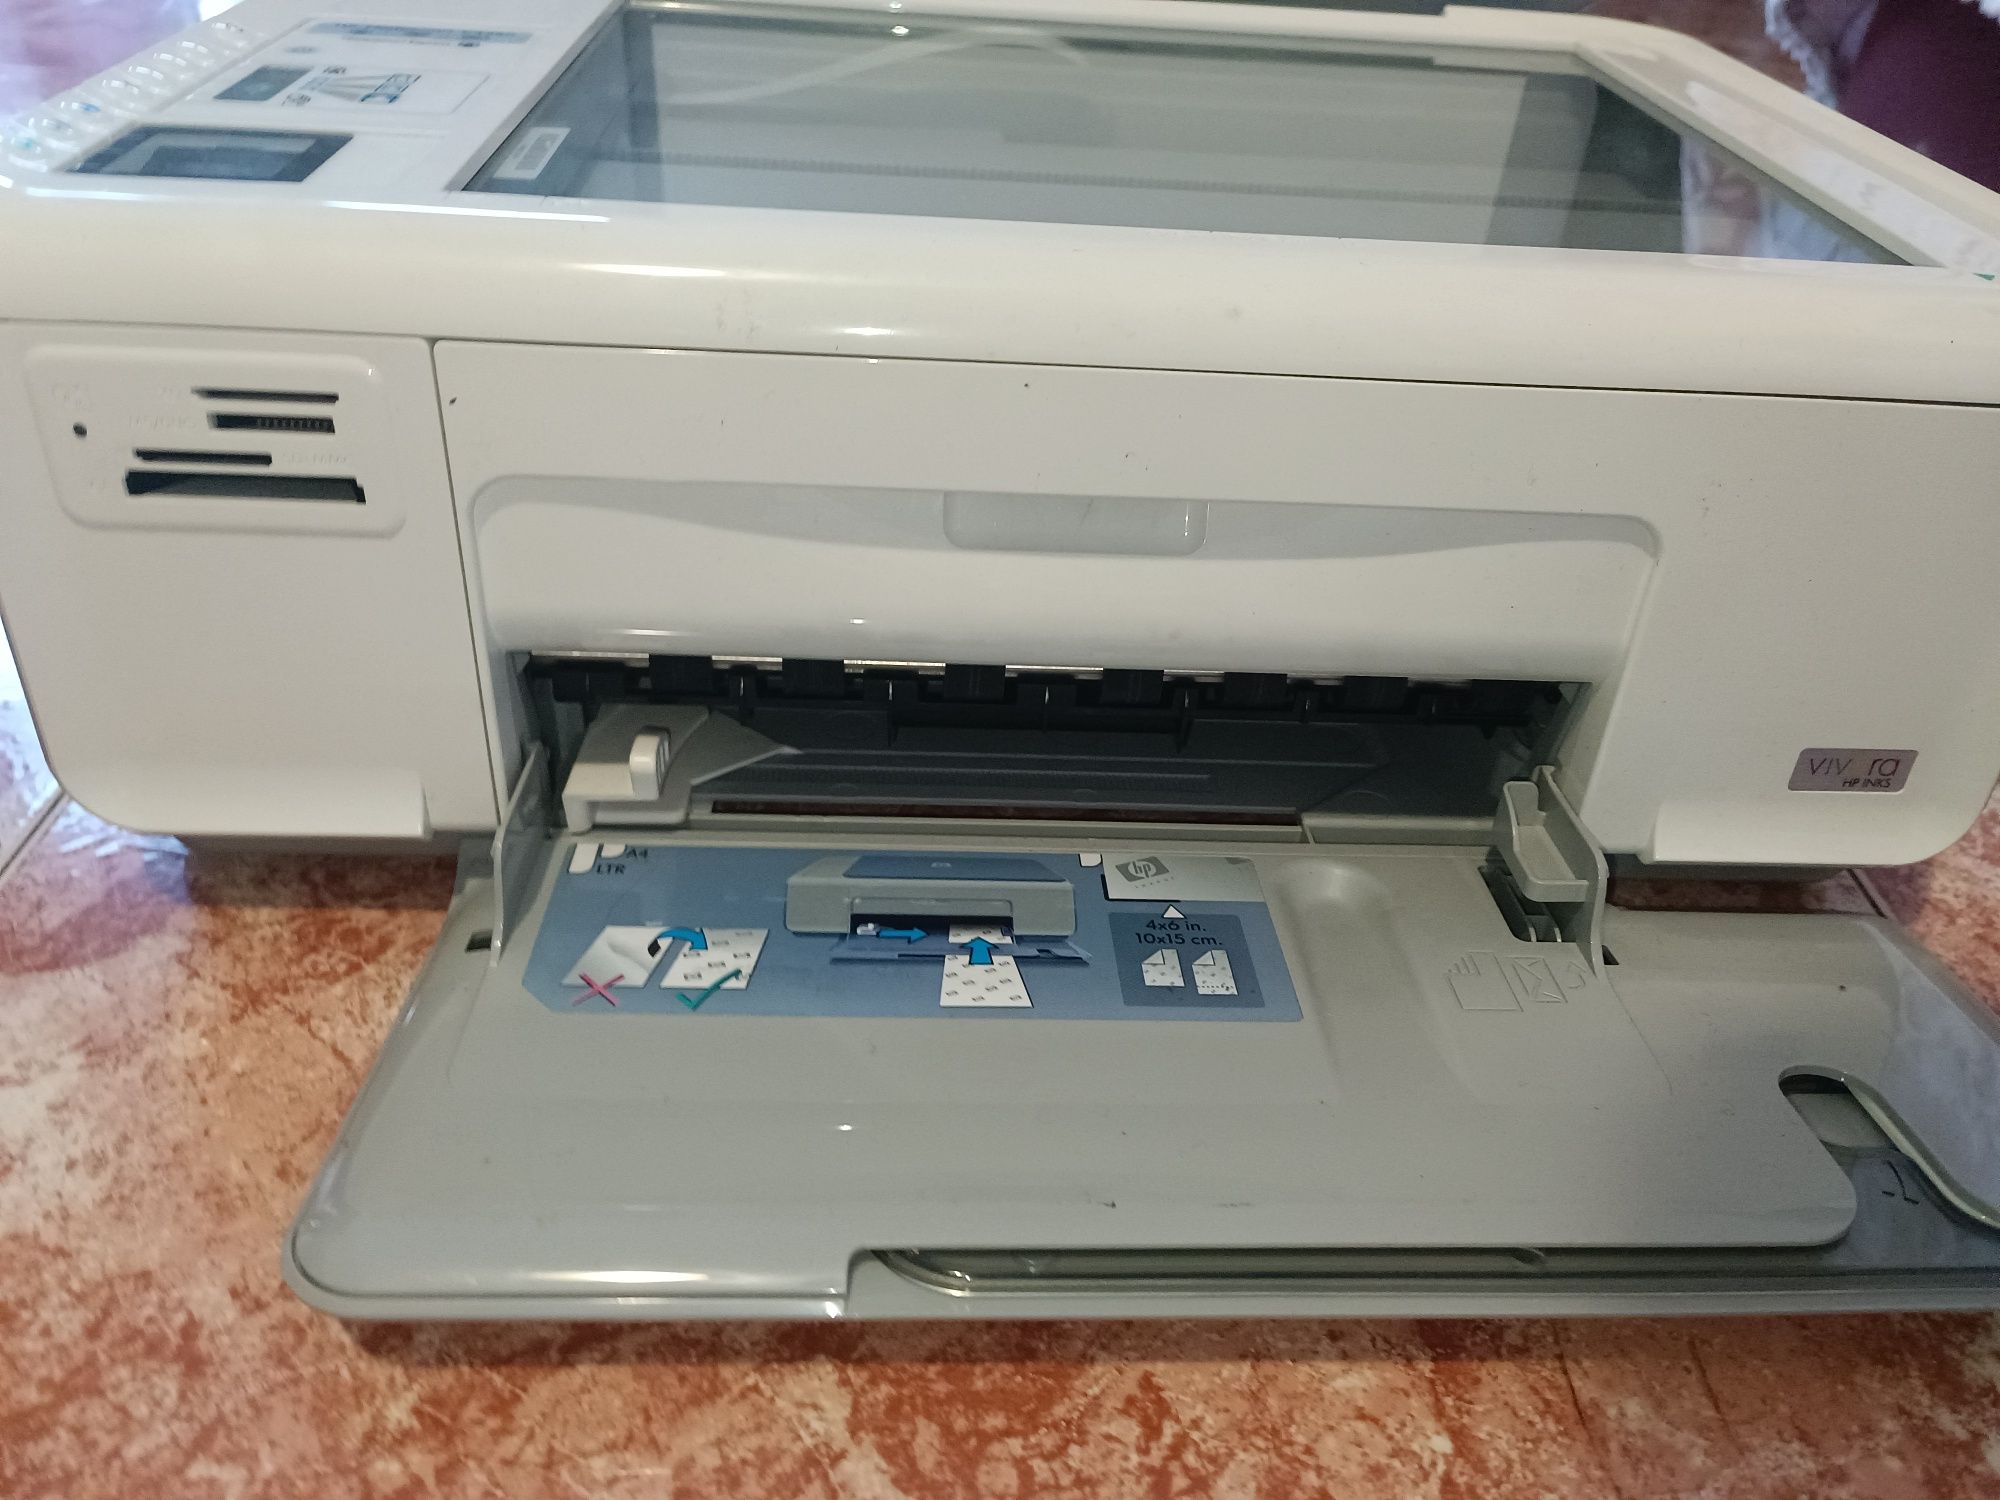 Impressora multifunções HP Photosmart c4280